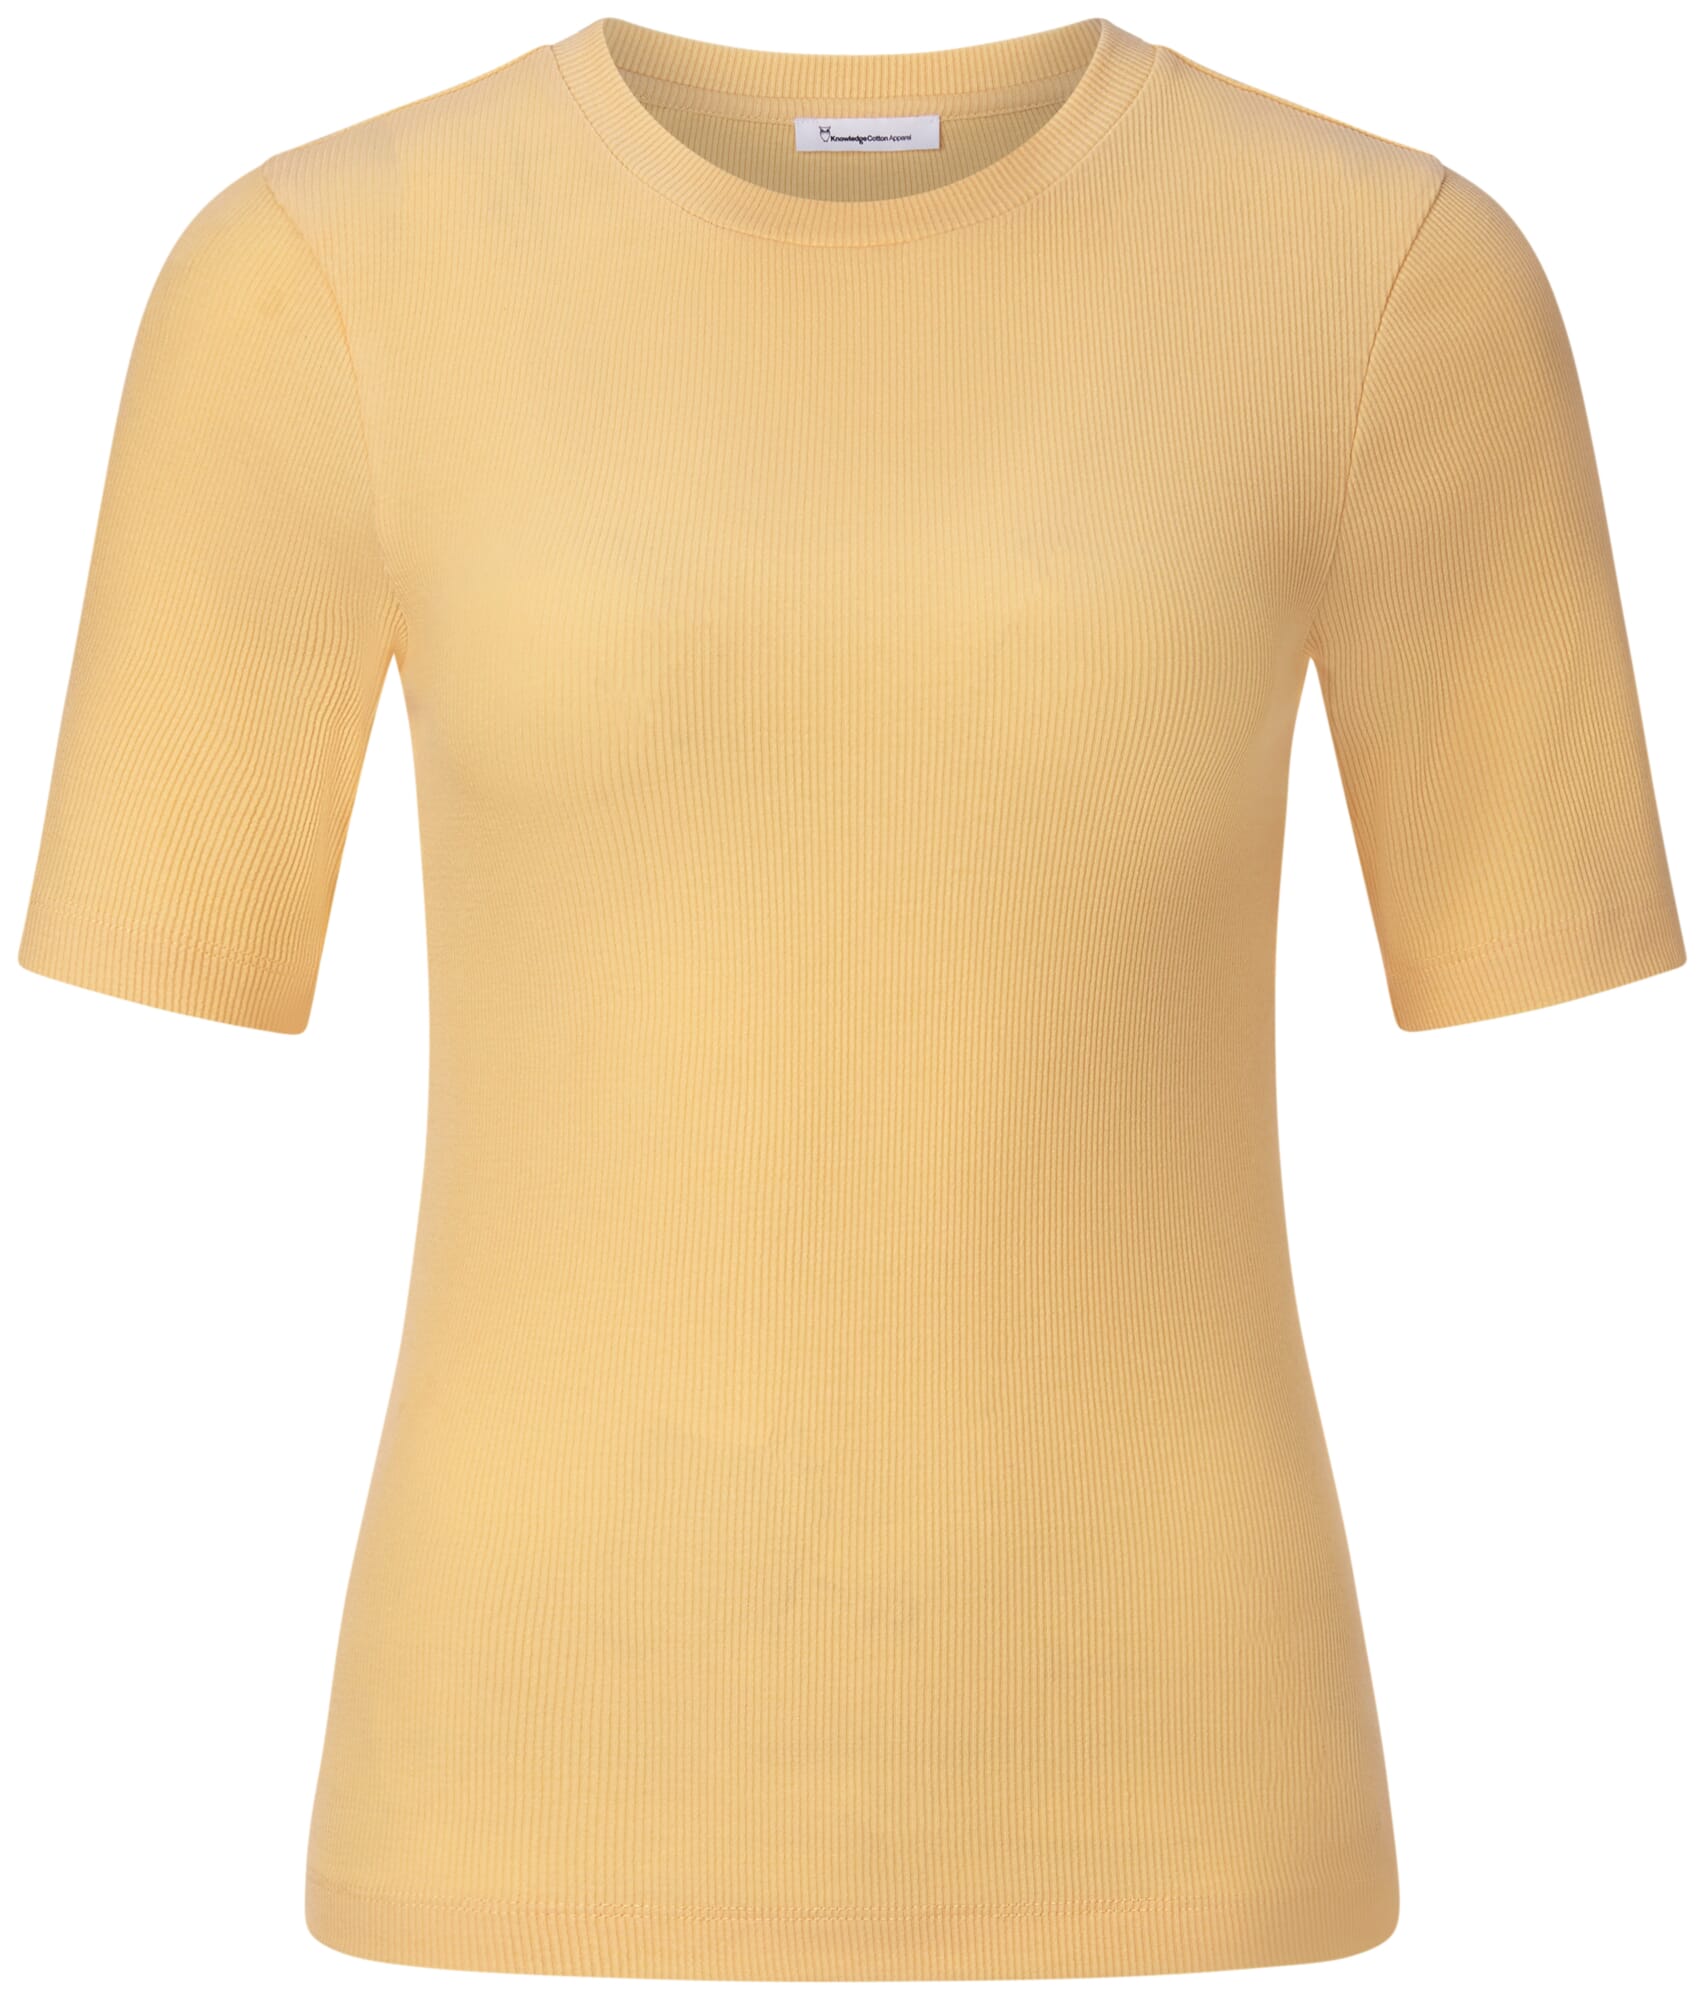 Ladies\' ribbed T-shirt, Yellow | Manufactum